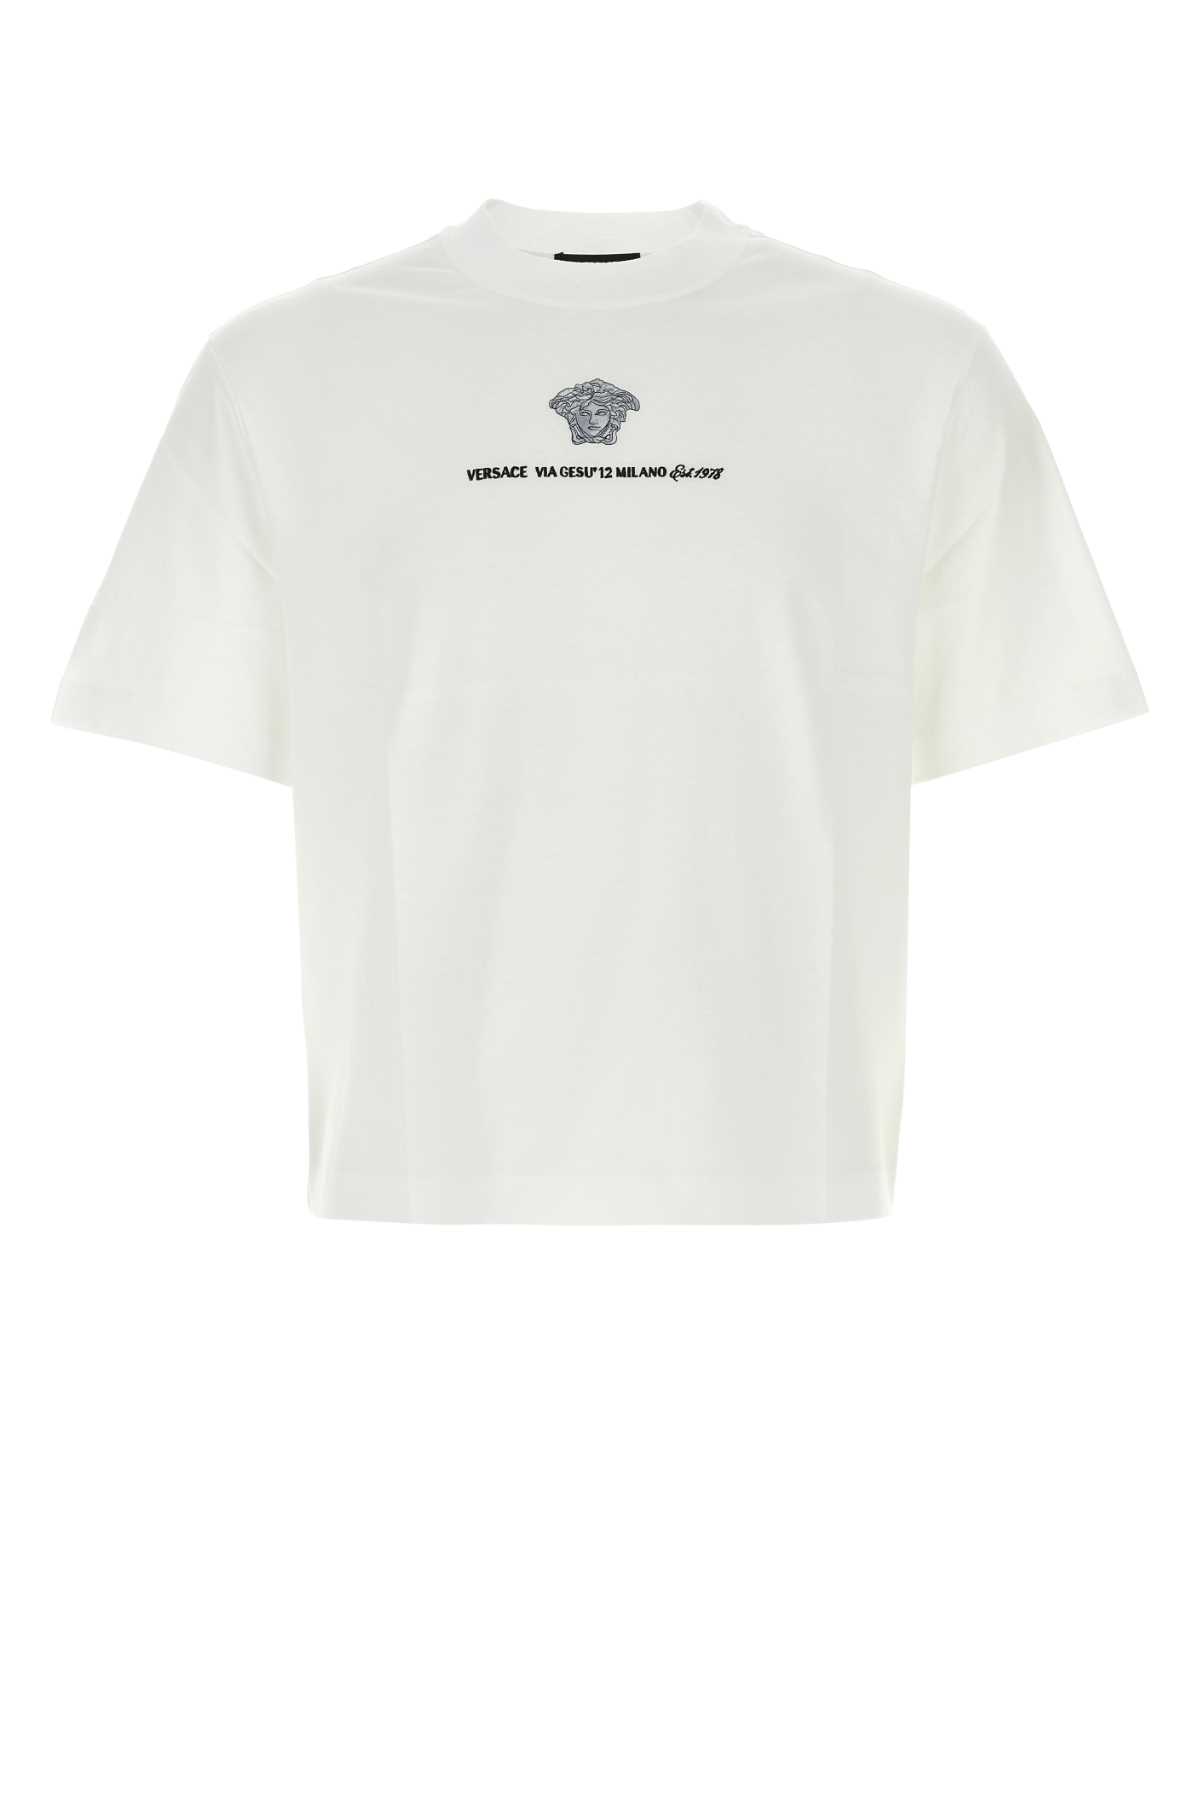 Versace White Cotton T-shirt